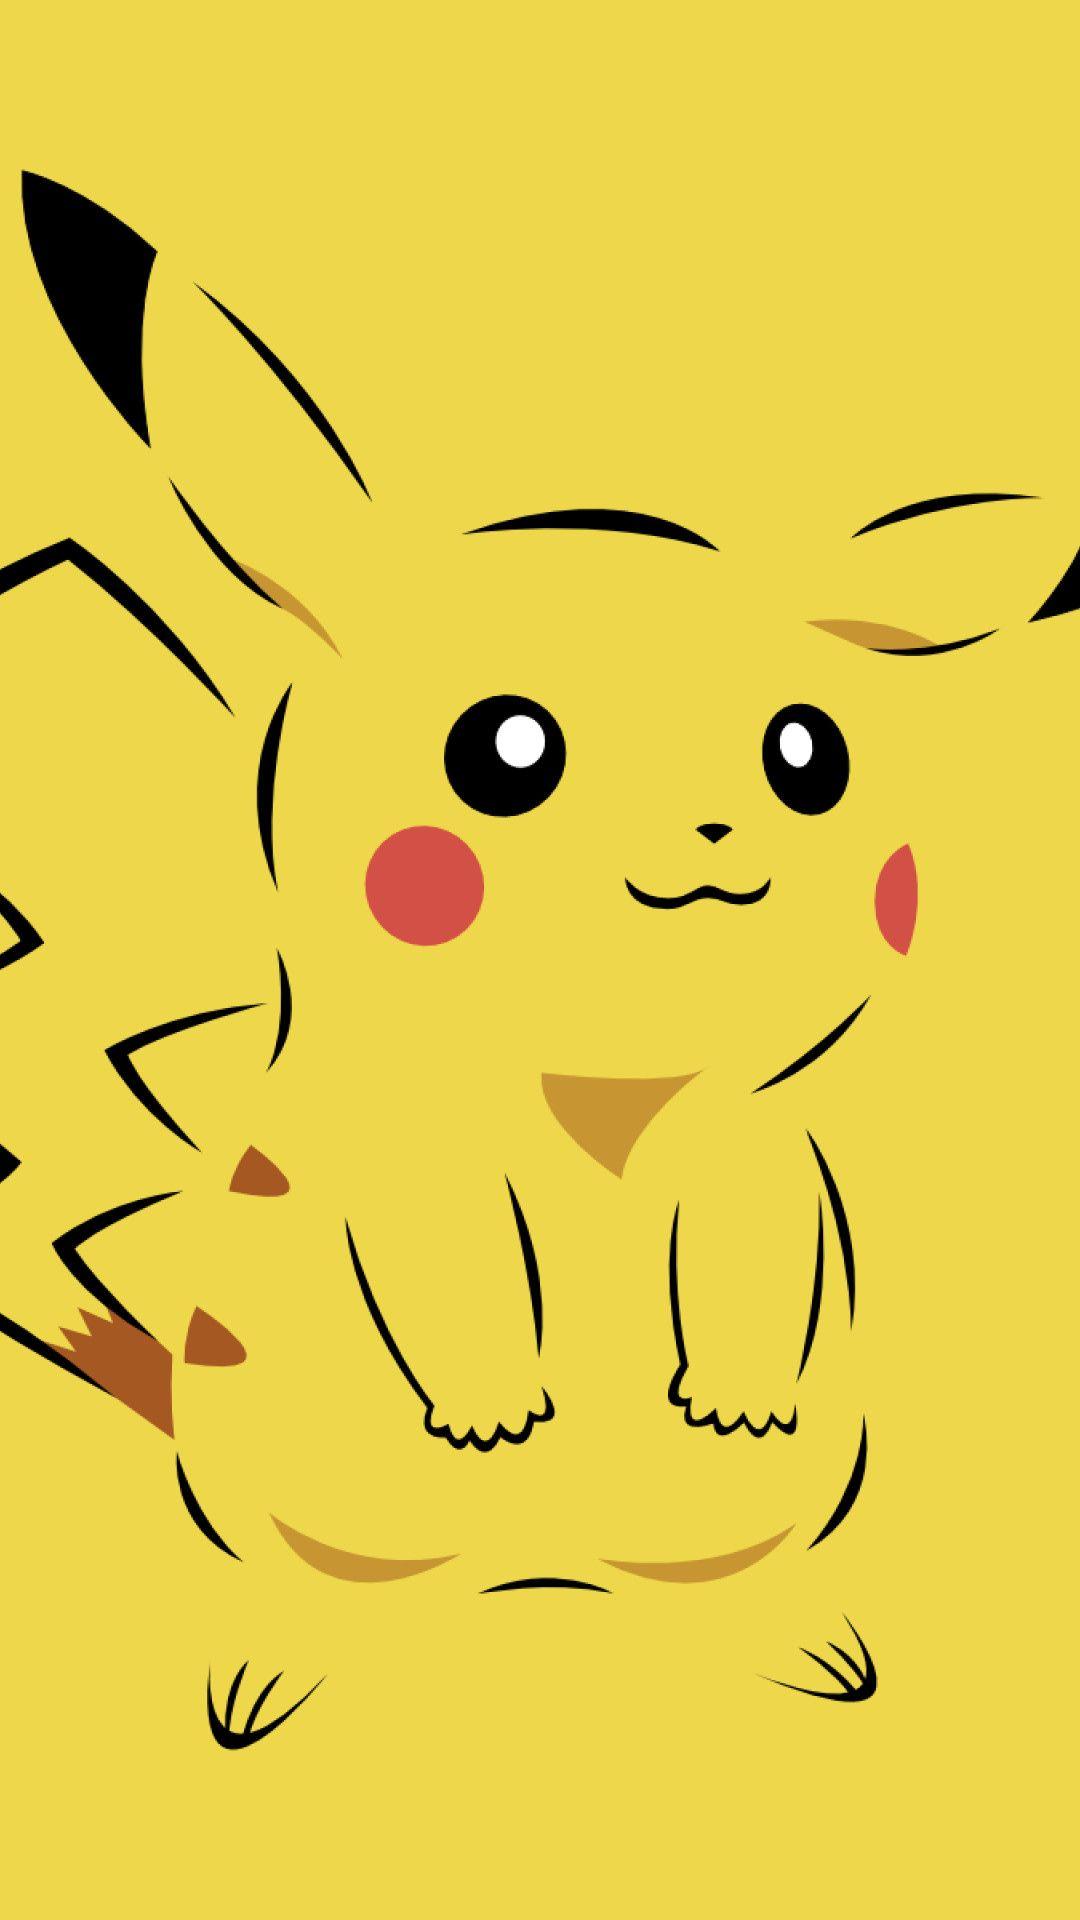 Best Free Pokemon iPhone Wallpaper. Pikachu